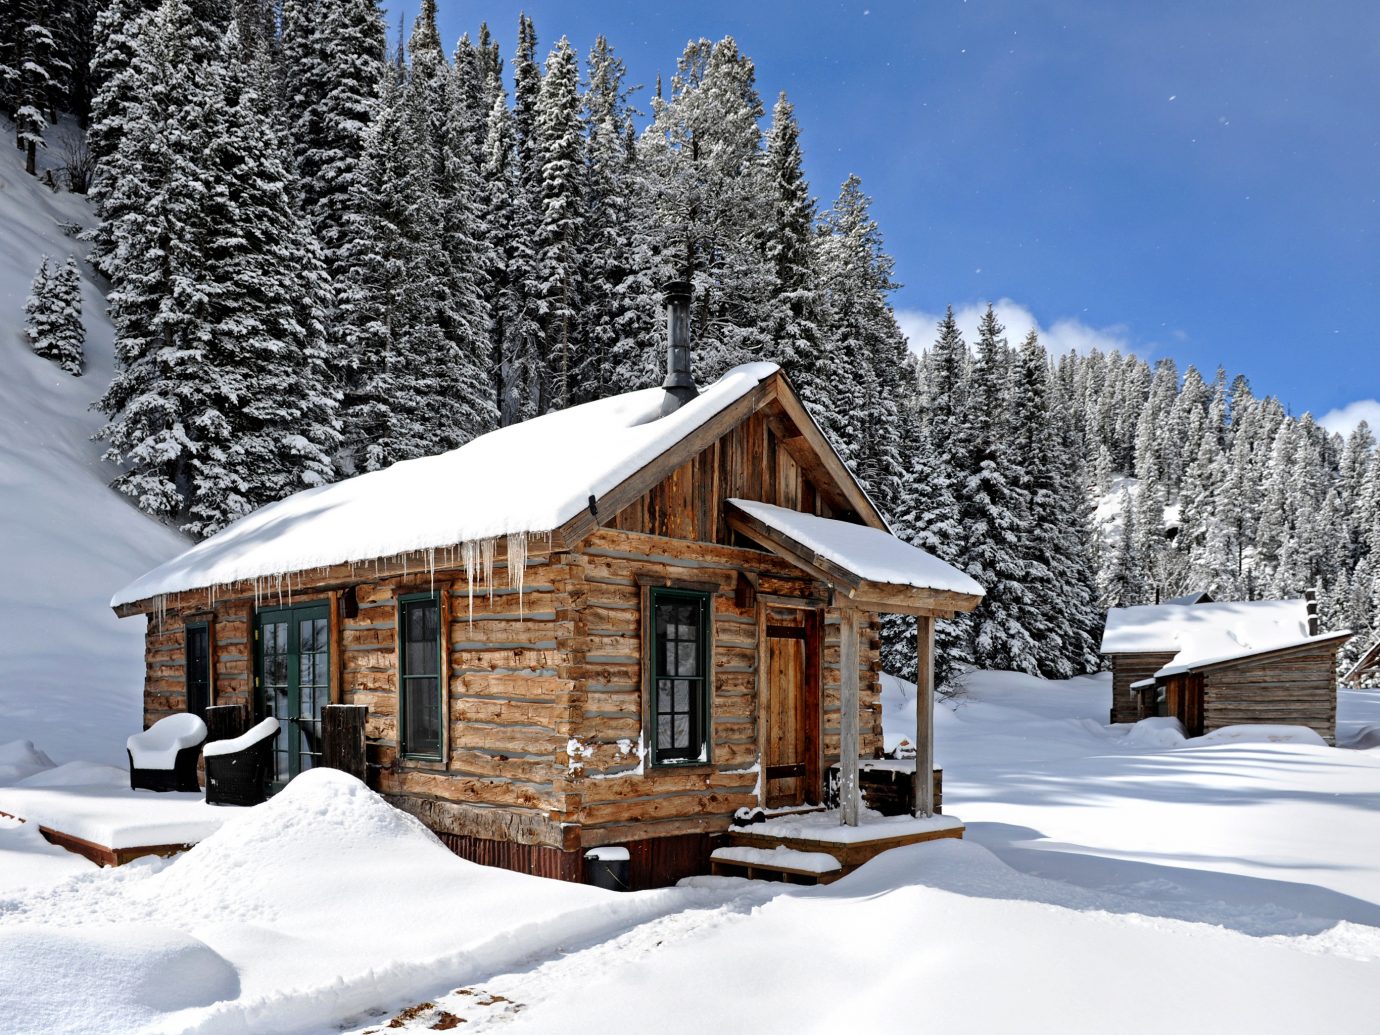 Winter Retreats: Seeking Comfort In Snowy Hideaways » Arthatravel.com